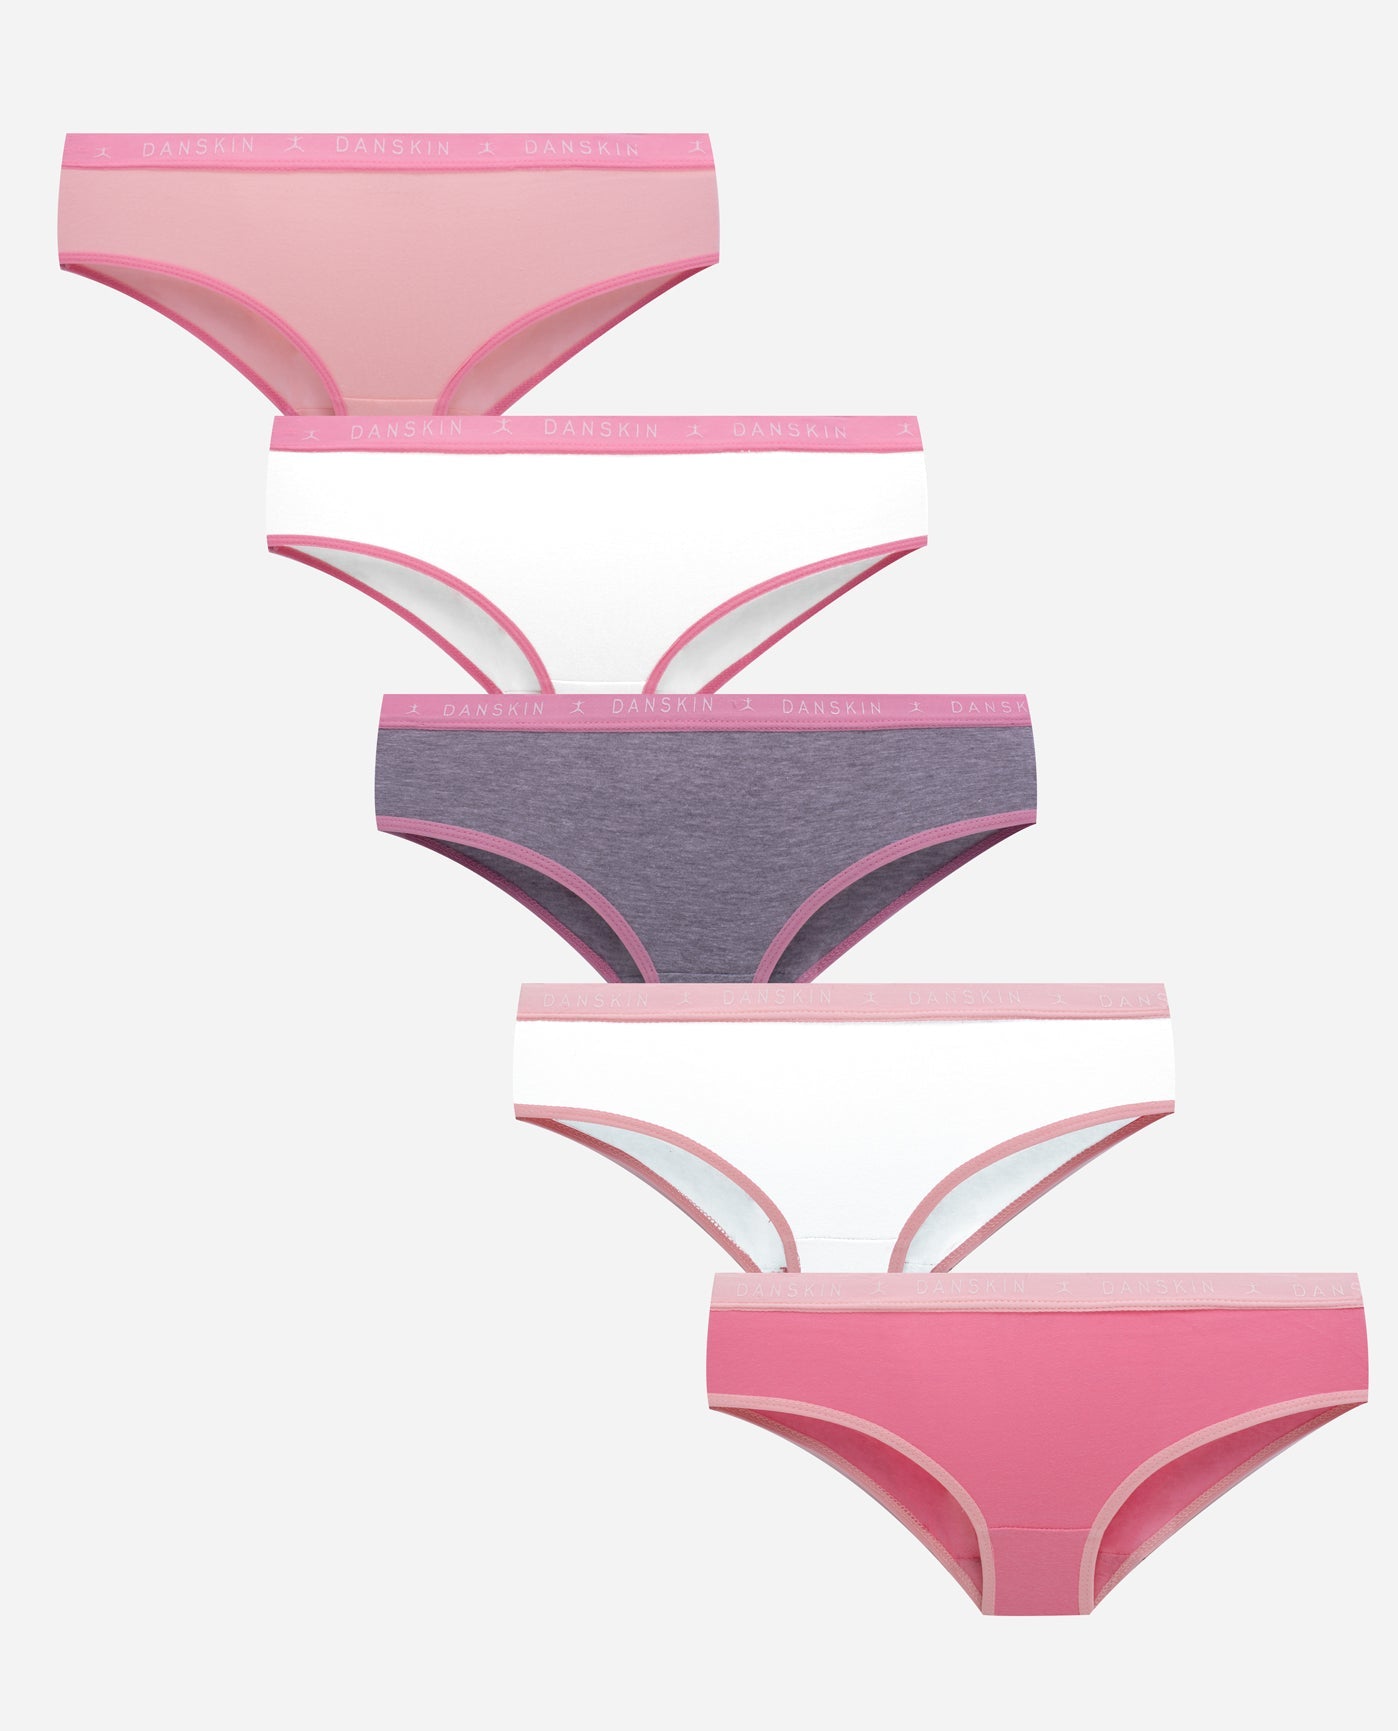 DANSKIN 4-PACK WOMEN'S Thongs and Hipsters Panties Underwear XL Gray Blue  Pink $16.99 - PicClick